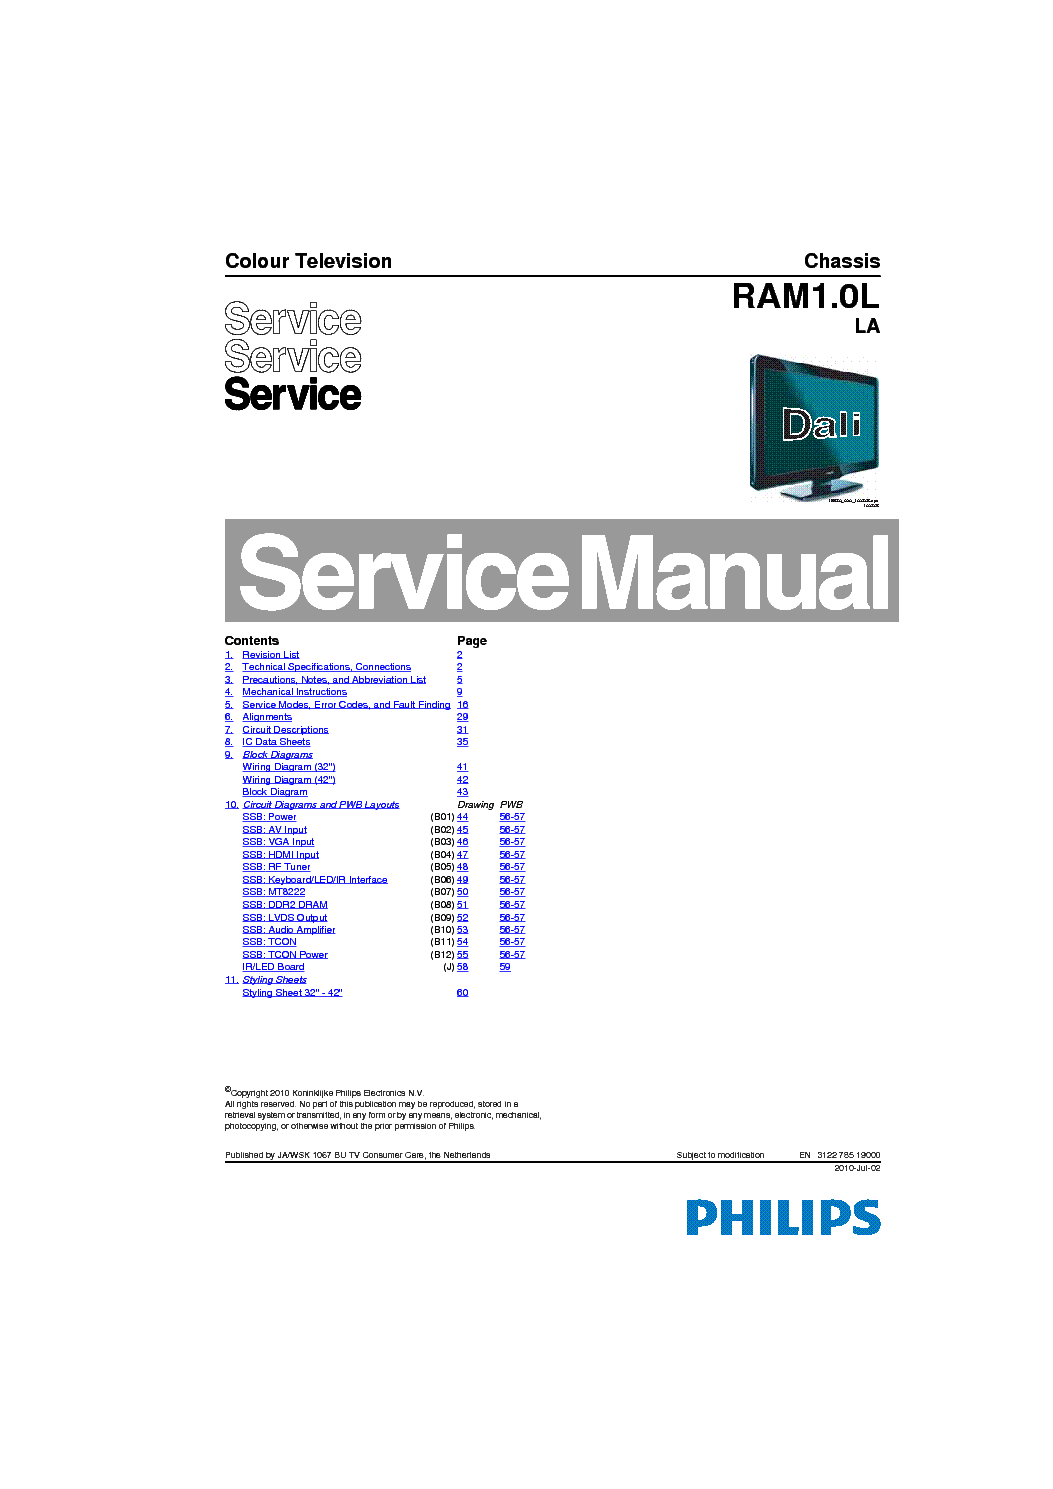 PHILIPS RAM1.0LLA service manual (1st page)